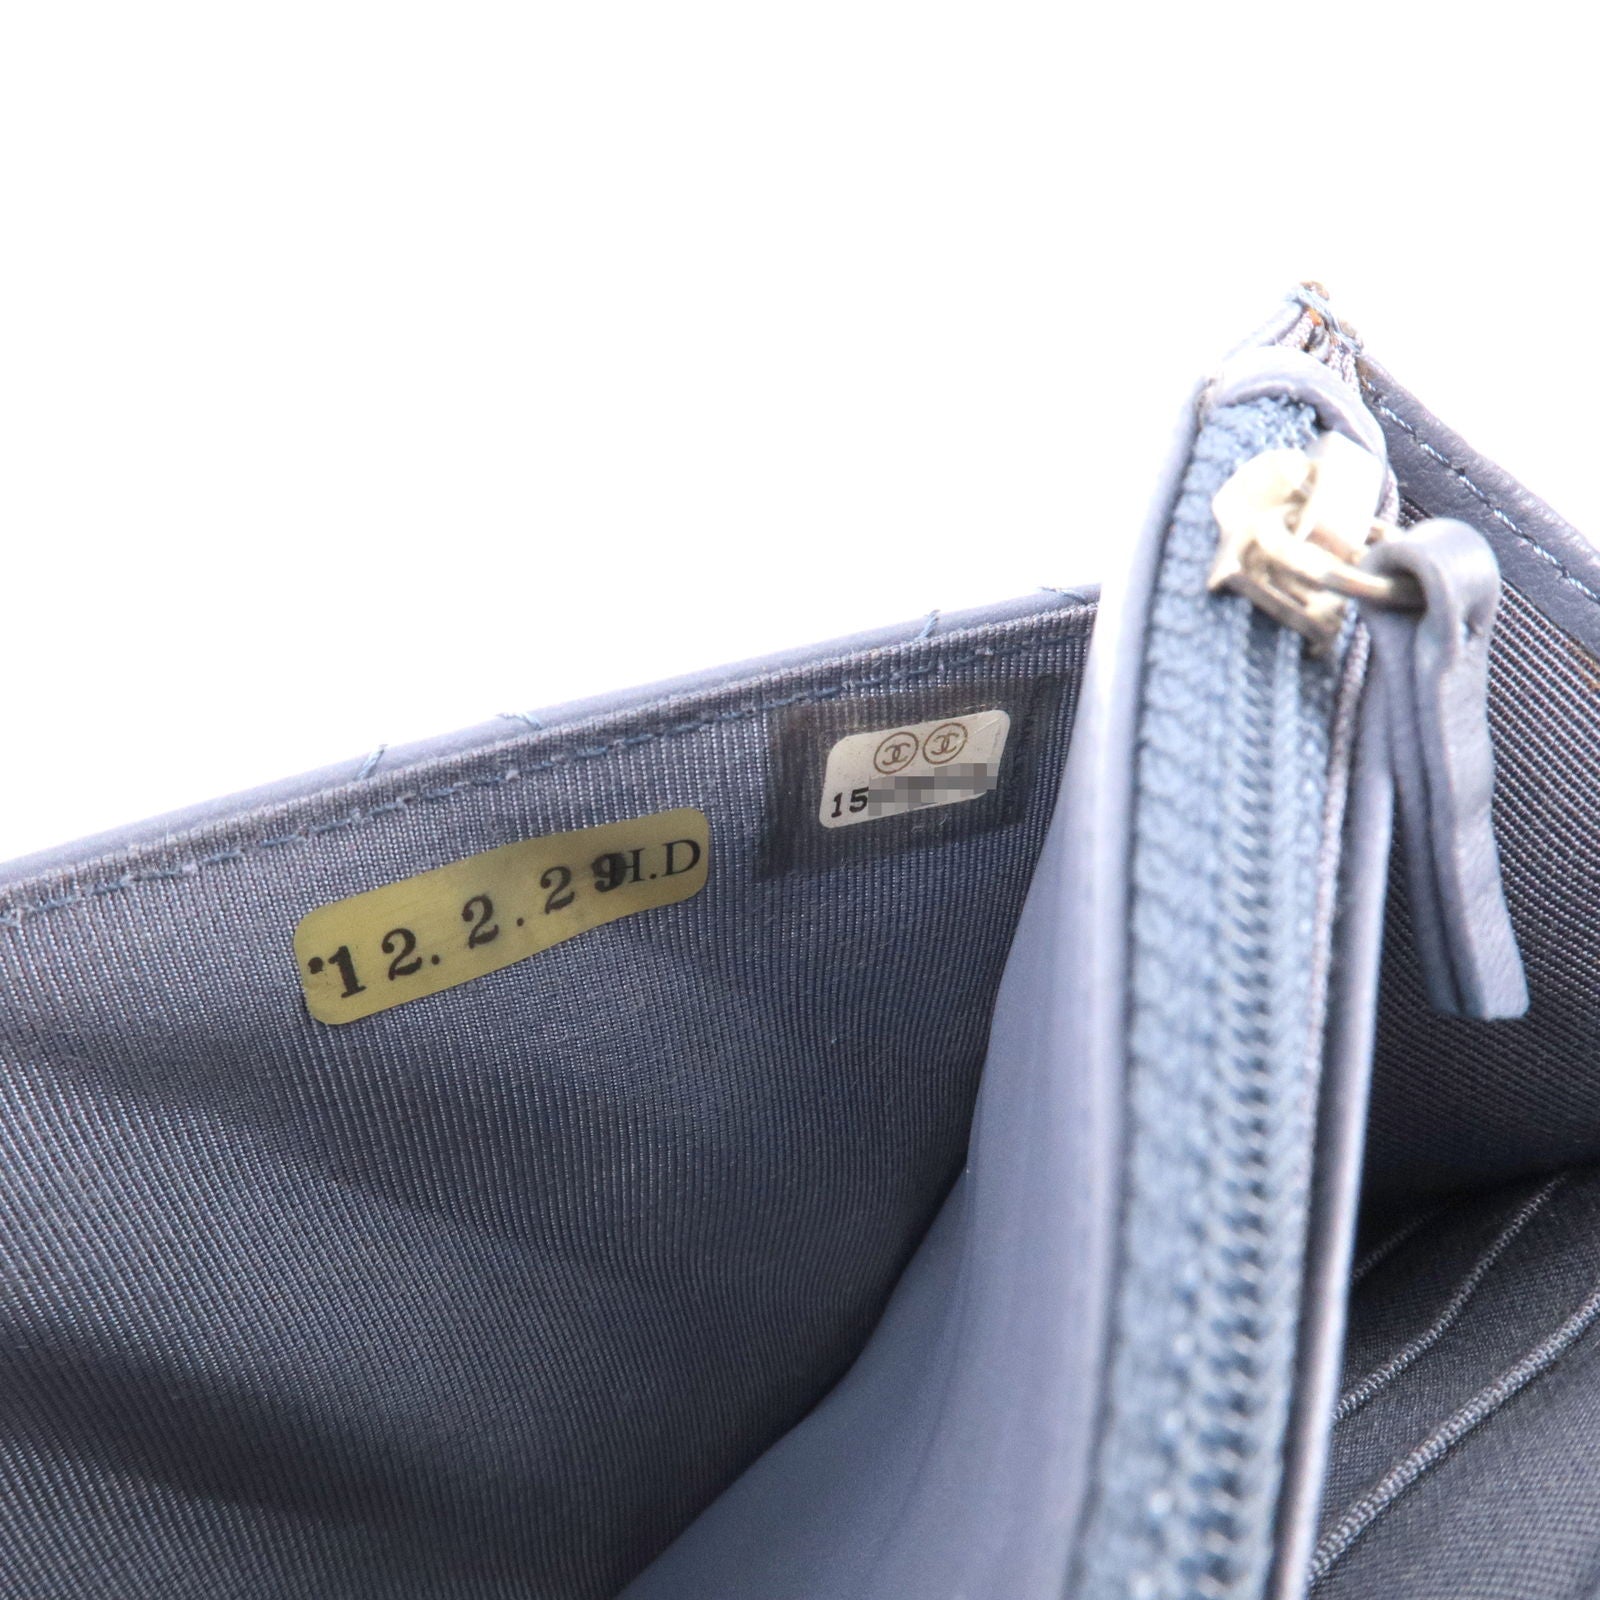 CHANEL, Bags, Nwt Chanel Beige Grain Leather Mini Zipper Wallet Coin Purse